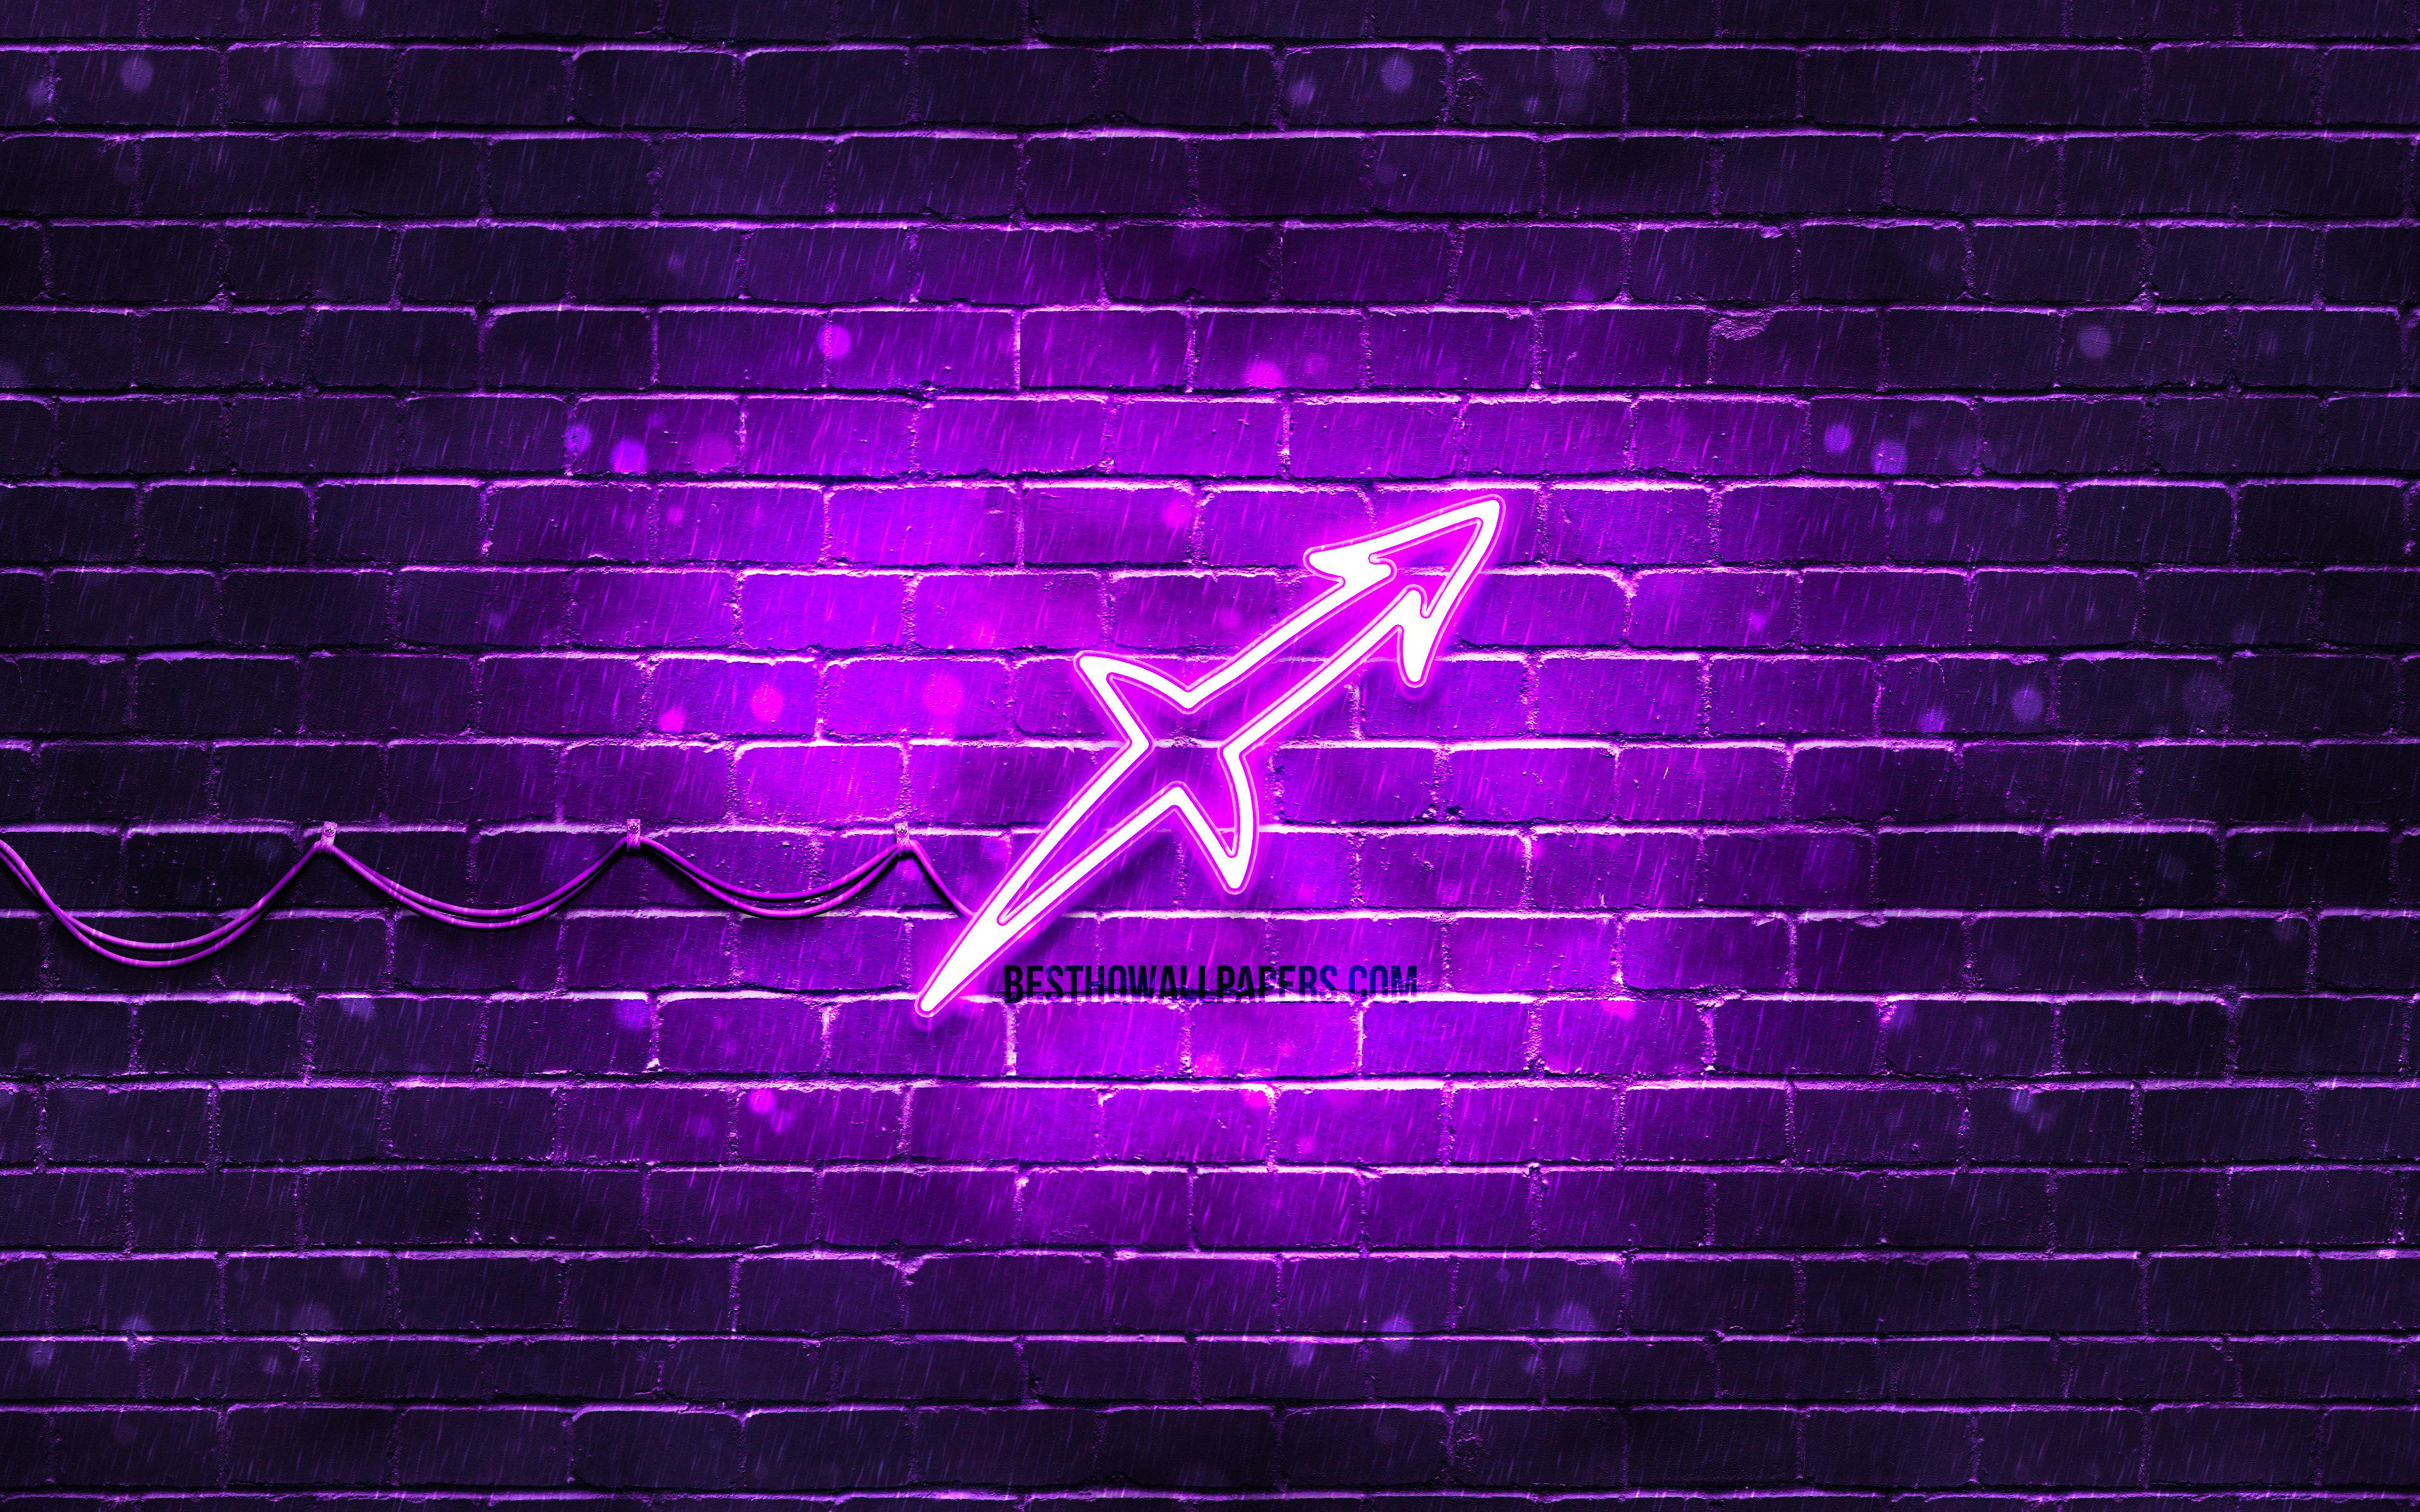 Download wallpaper Sagittarius neon sign, 4k, violet brickwall, creative art, zodiac signs, Sagittarius zodiac symbol, Sagittarius zodiac sign, astrology, Sagittarius Horoscope sign, astrological sign, zodiac neon signs, Sagittarius for desktop